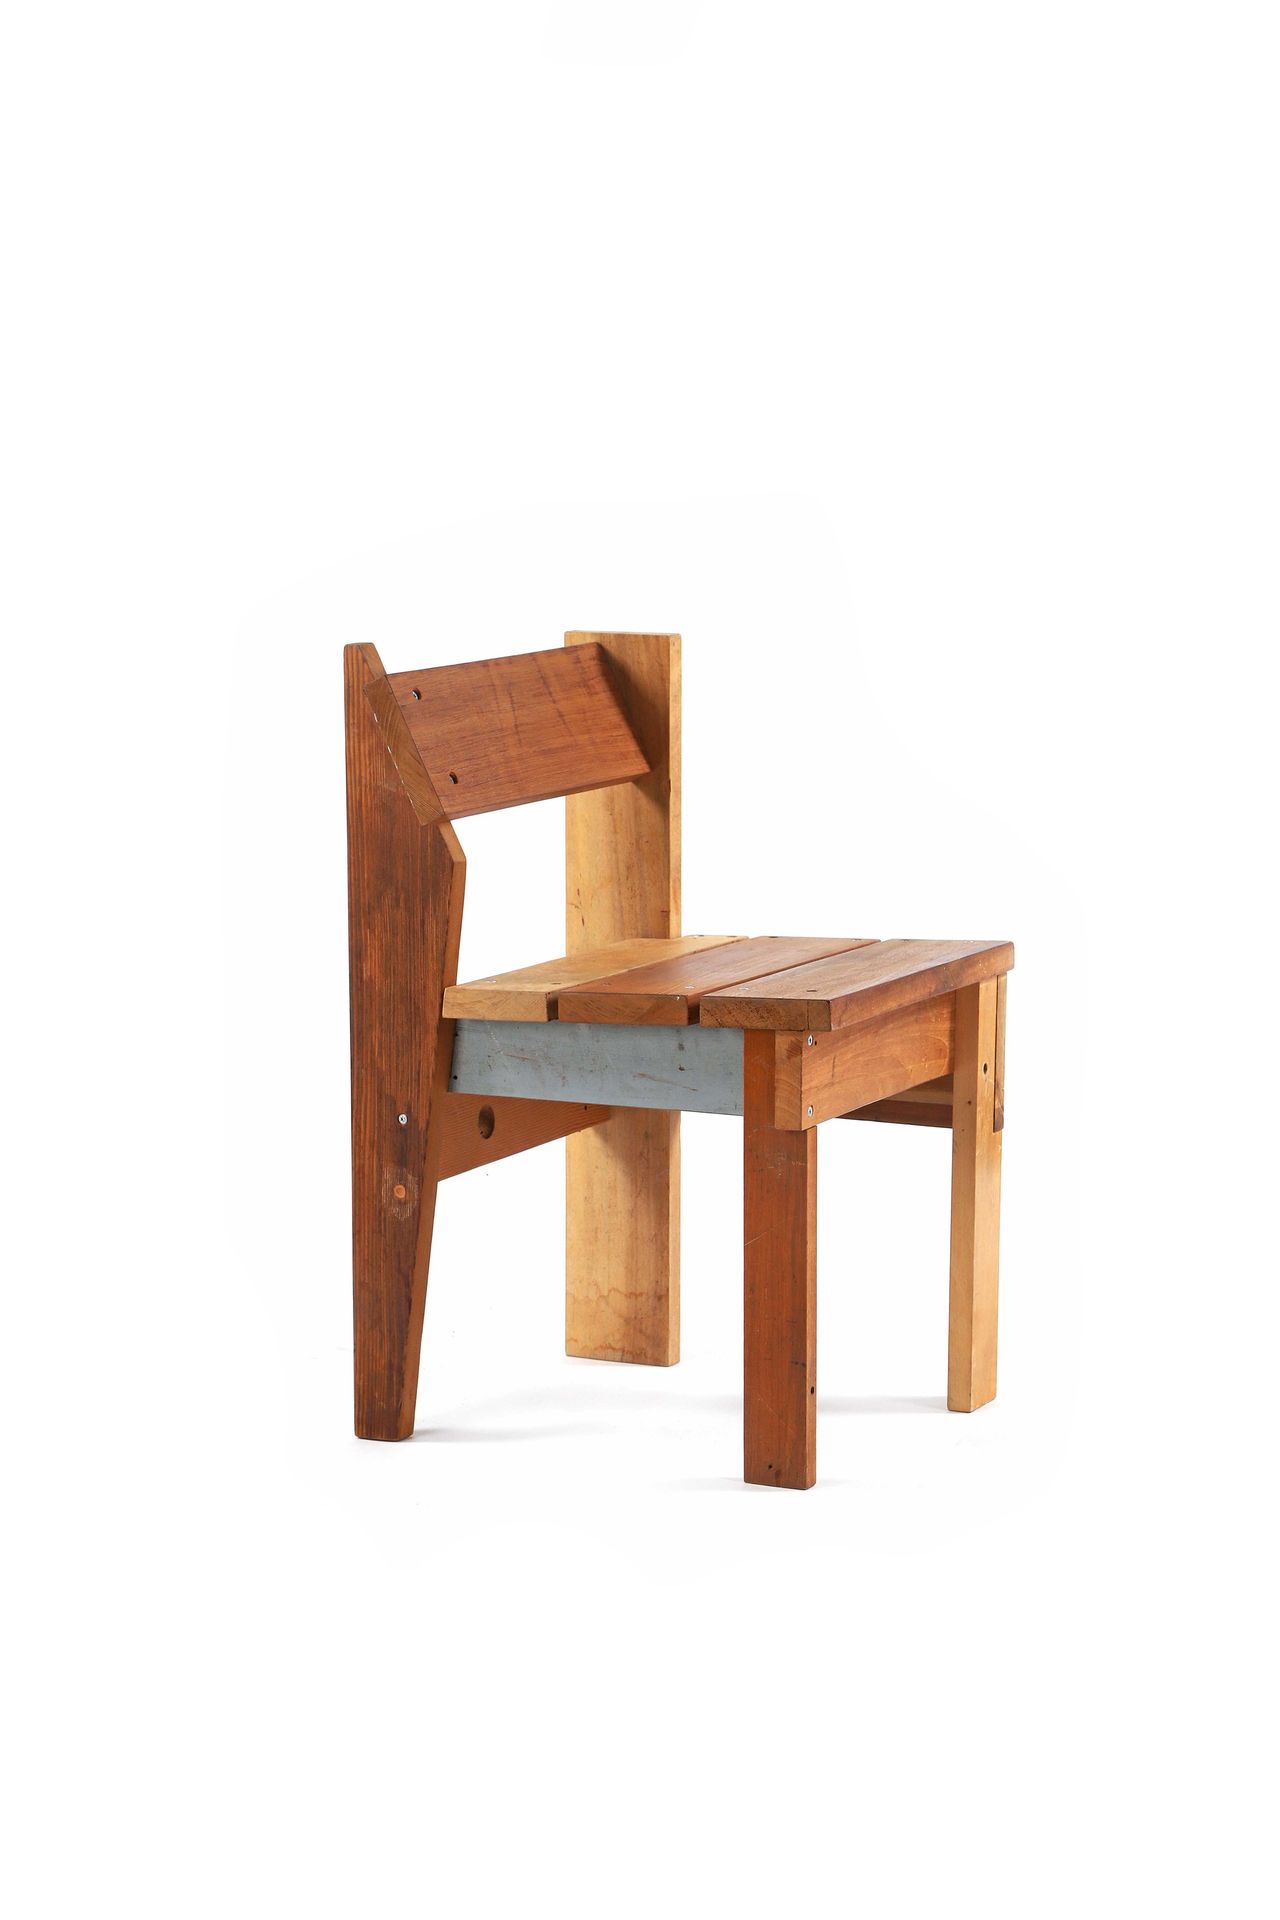 Rikkert PAAUW (1982) 椅子 
木材、金属
(在乌得勒支发现和储存的材料) 
独特的作品
75 x 46 x 50厘米。
2019

独特的椅&hellip;